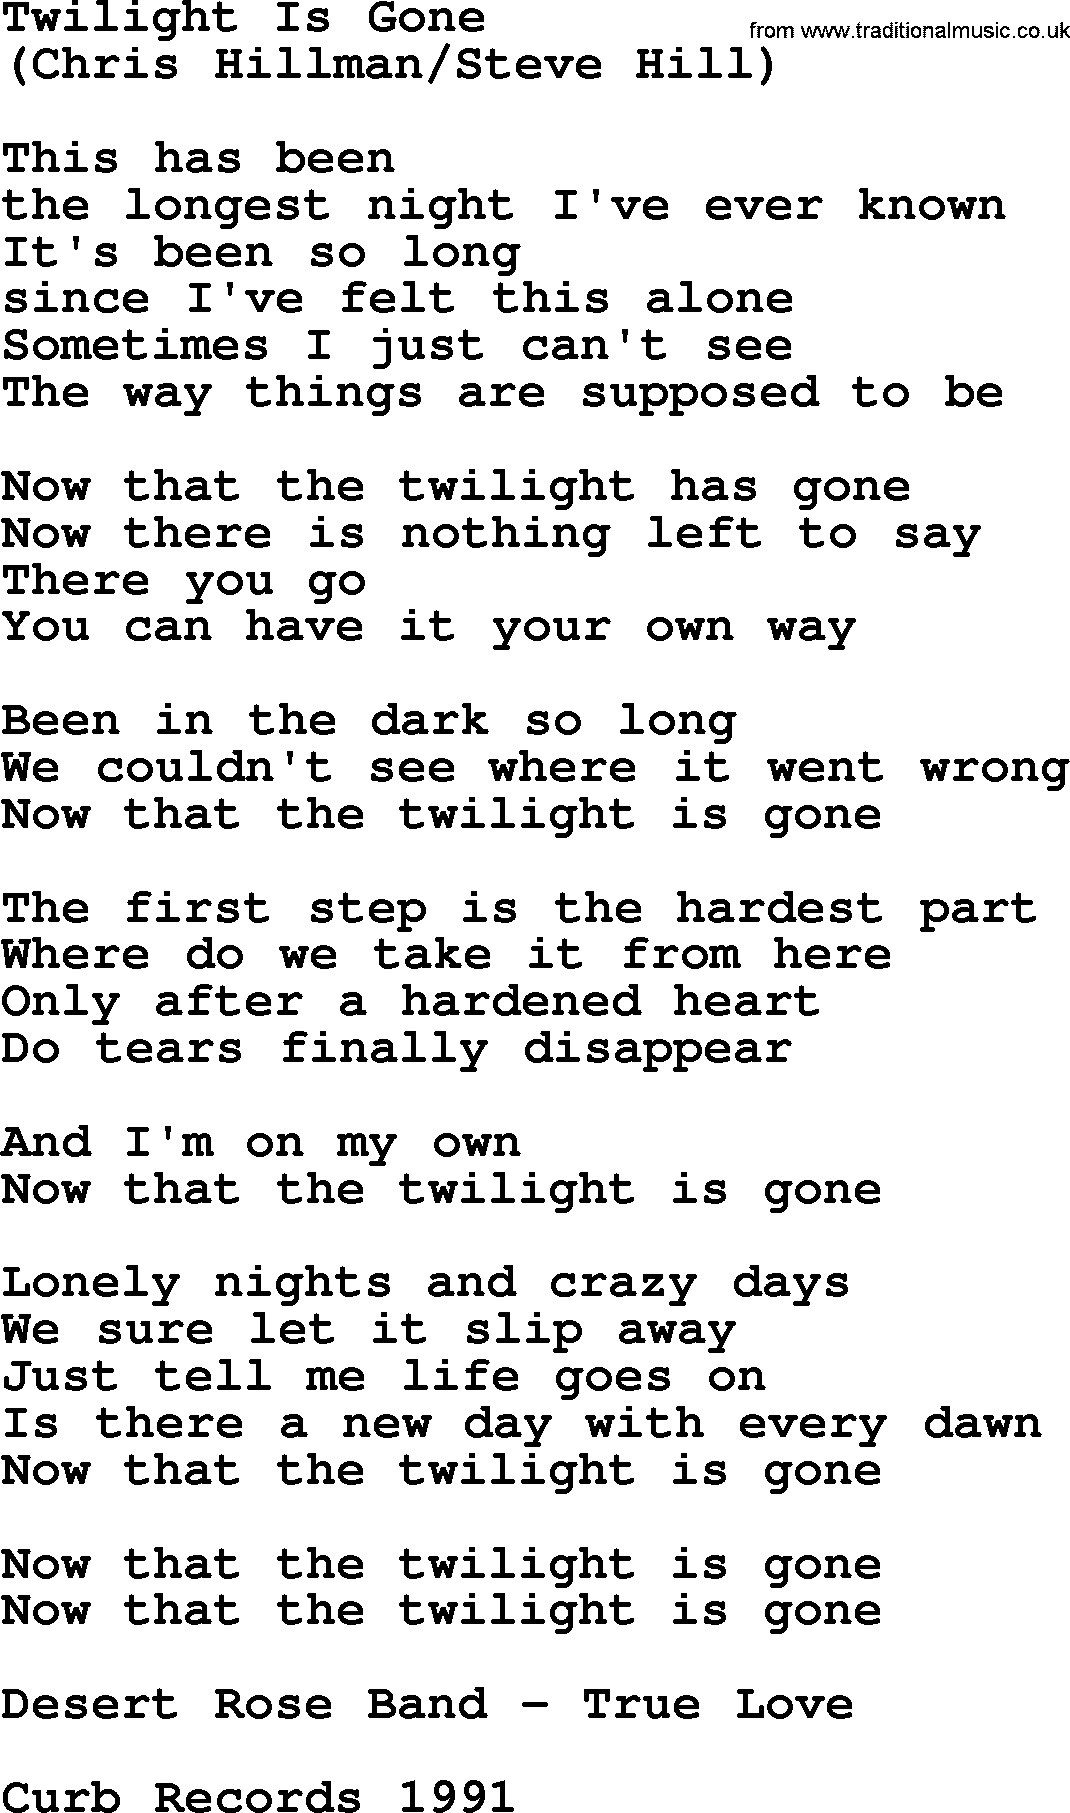 The Byrds song Twilight Is Gone, lyrics